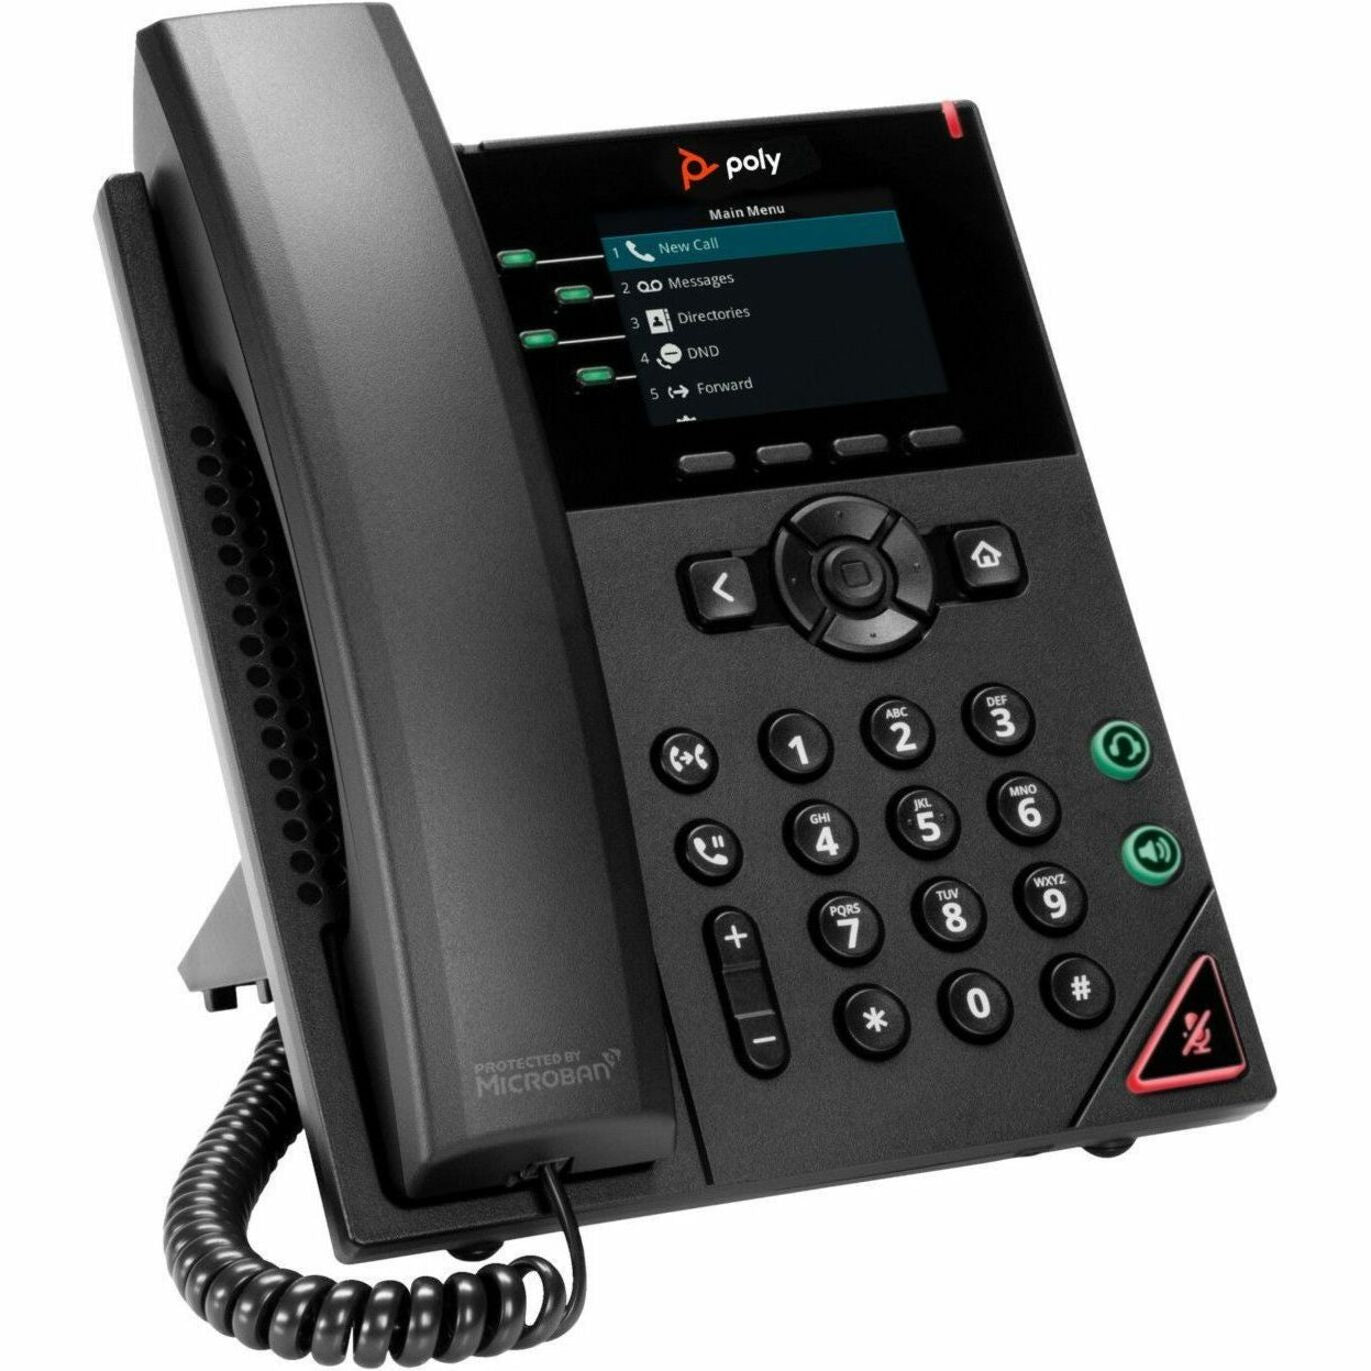 Poly HP (89B64AA) IP Phones